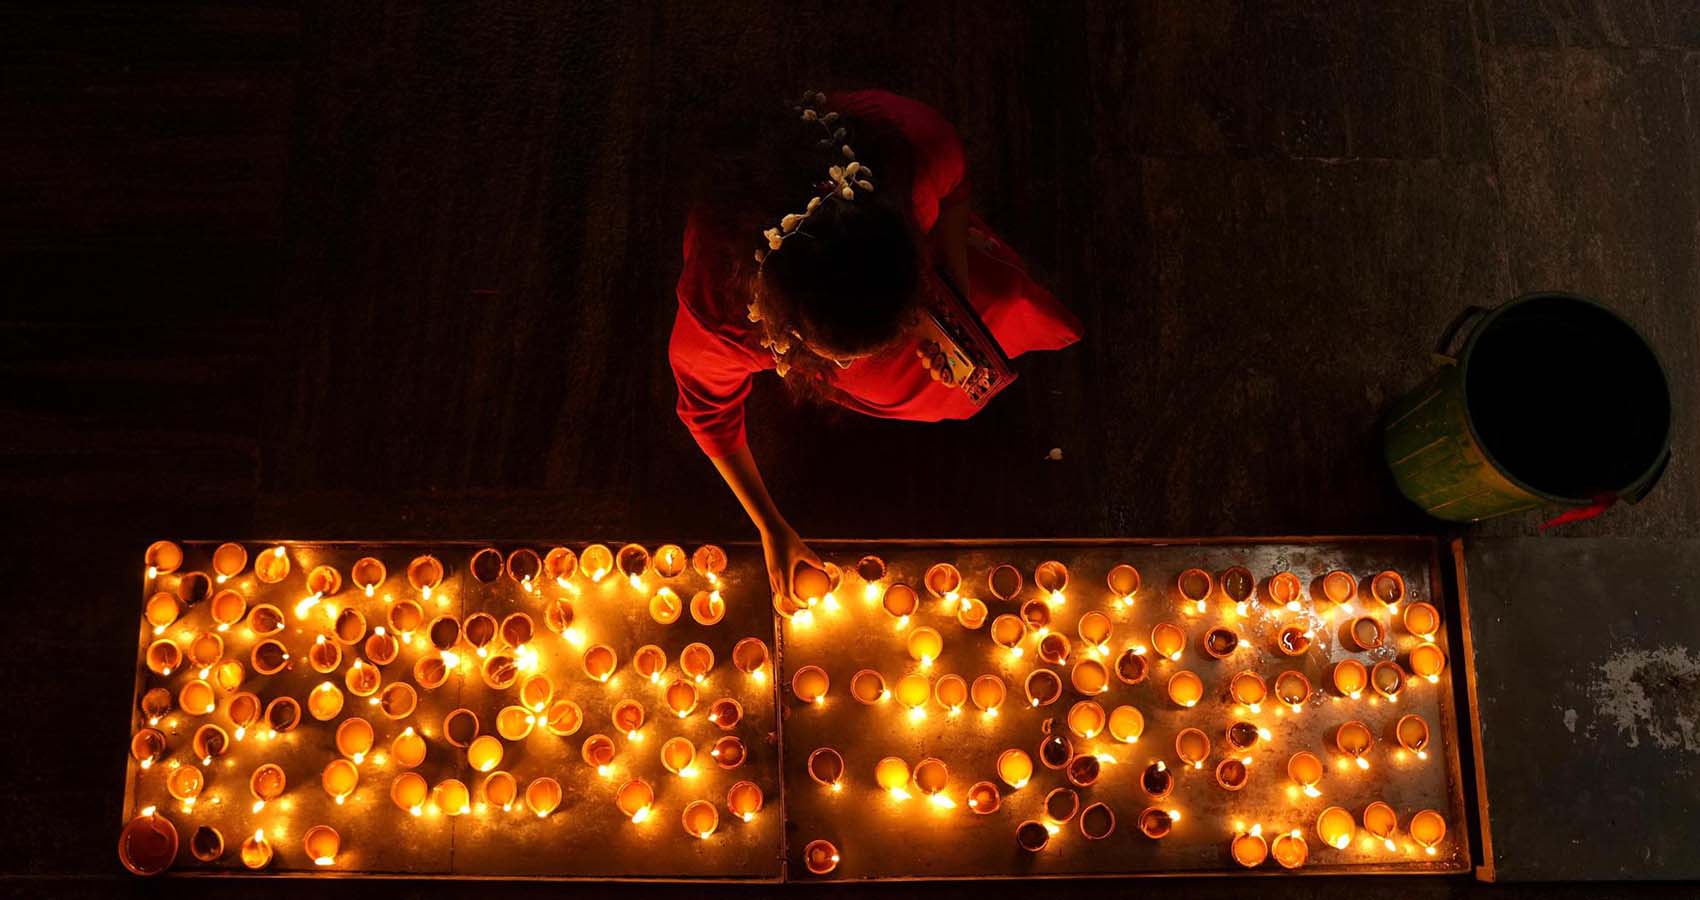 900,000 Earthen Lamps Light Up Ayodhya, Celebrating Lord Ram’s Triumphant Return